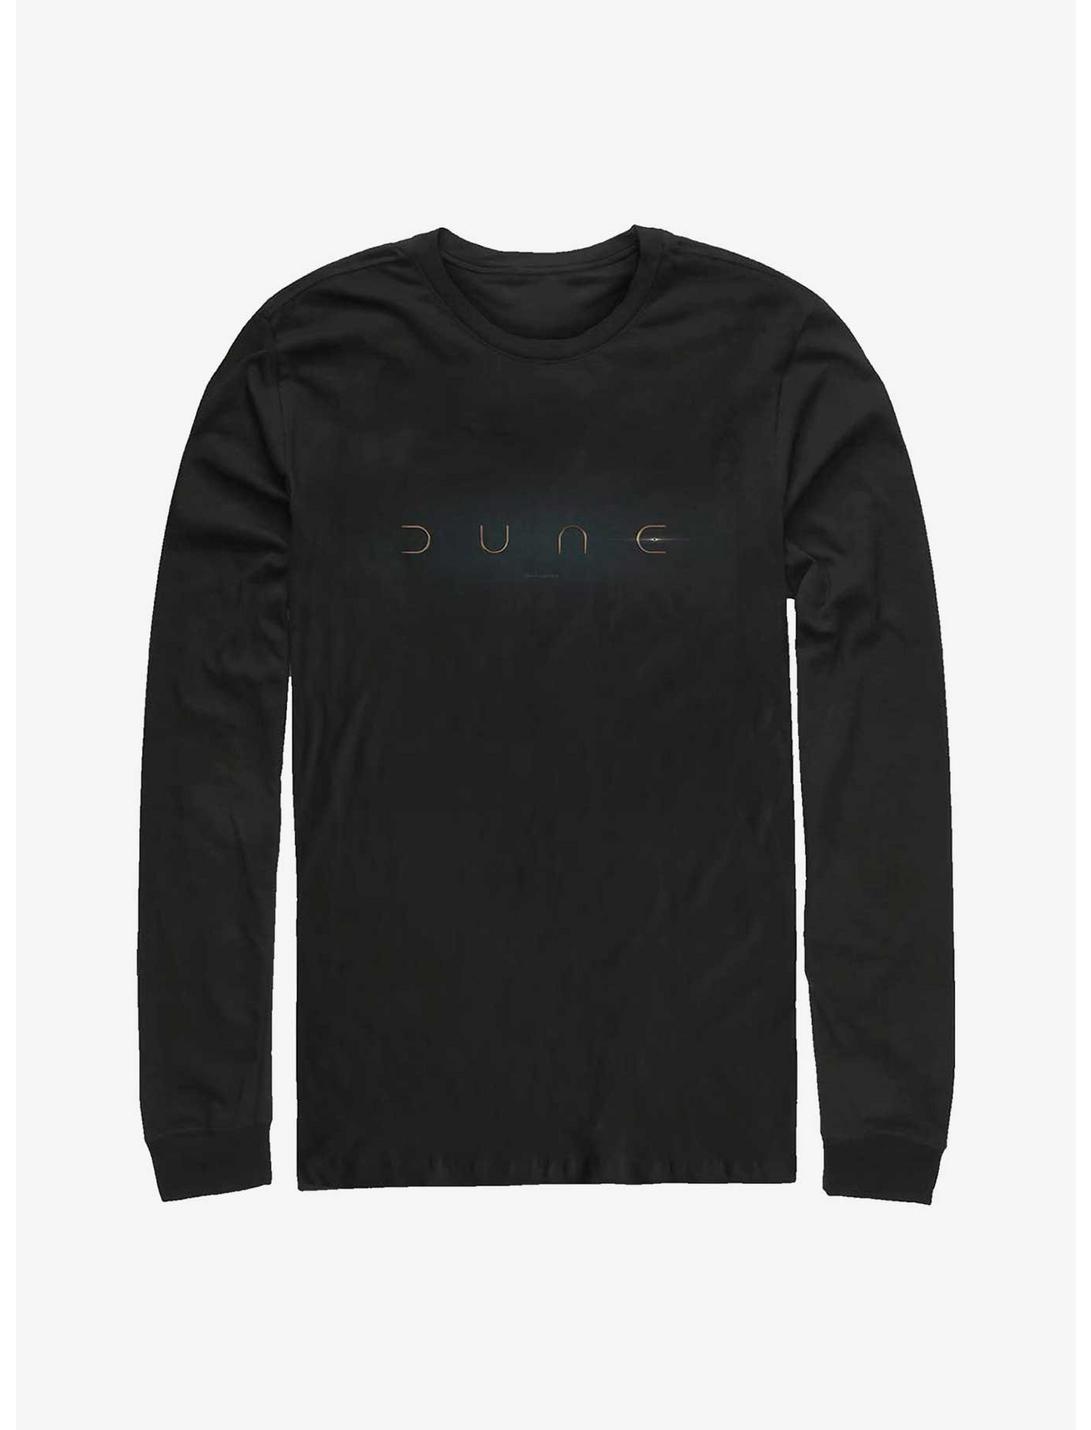 Dune Logo Long-Sleeve T-Shirt, BLACK, hi-res